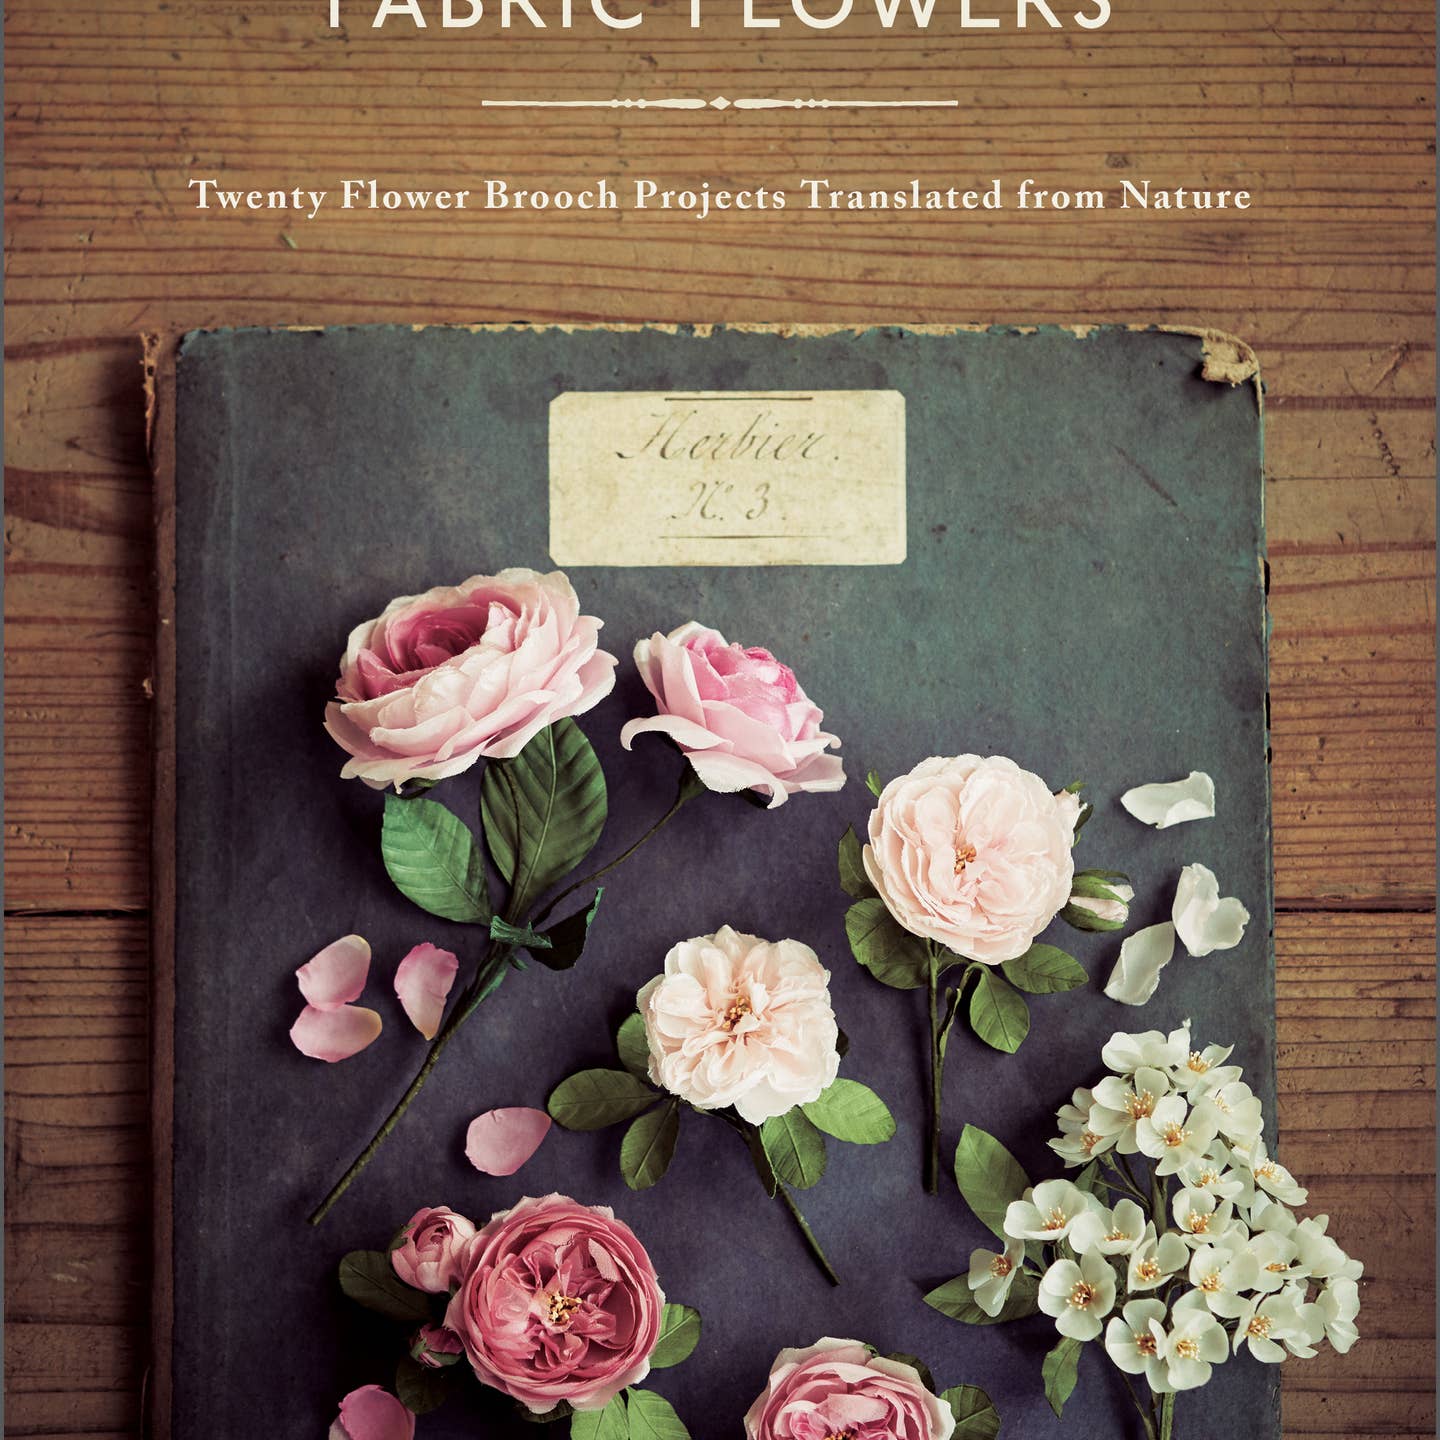 The Herbarium of Fabric Flowers